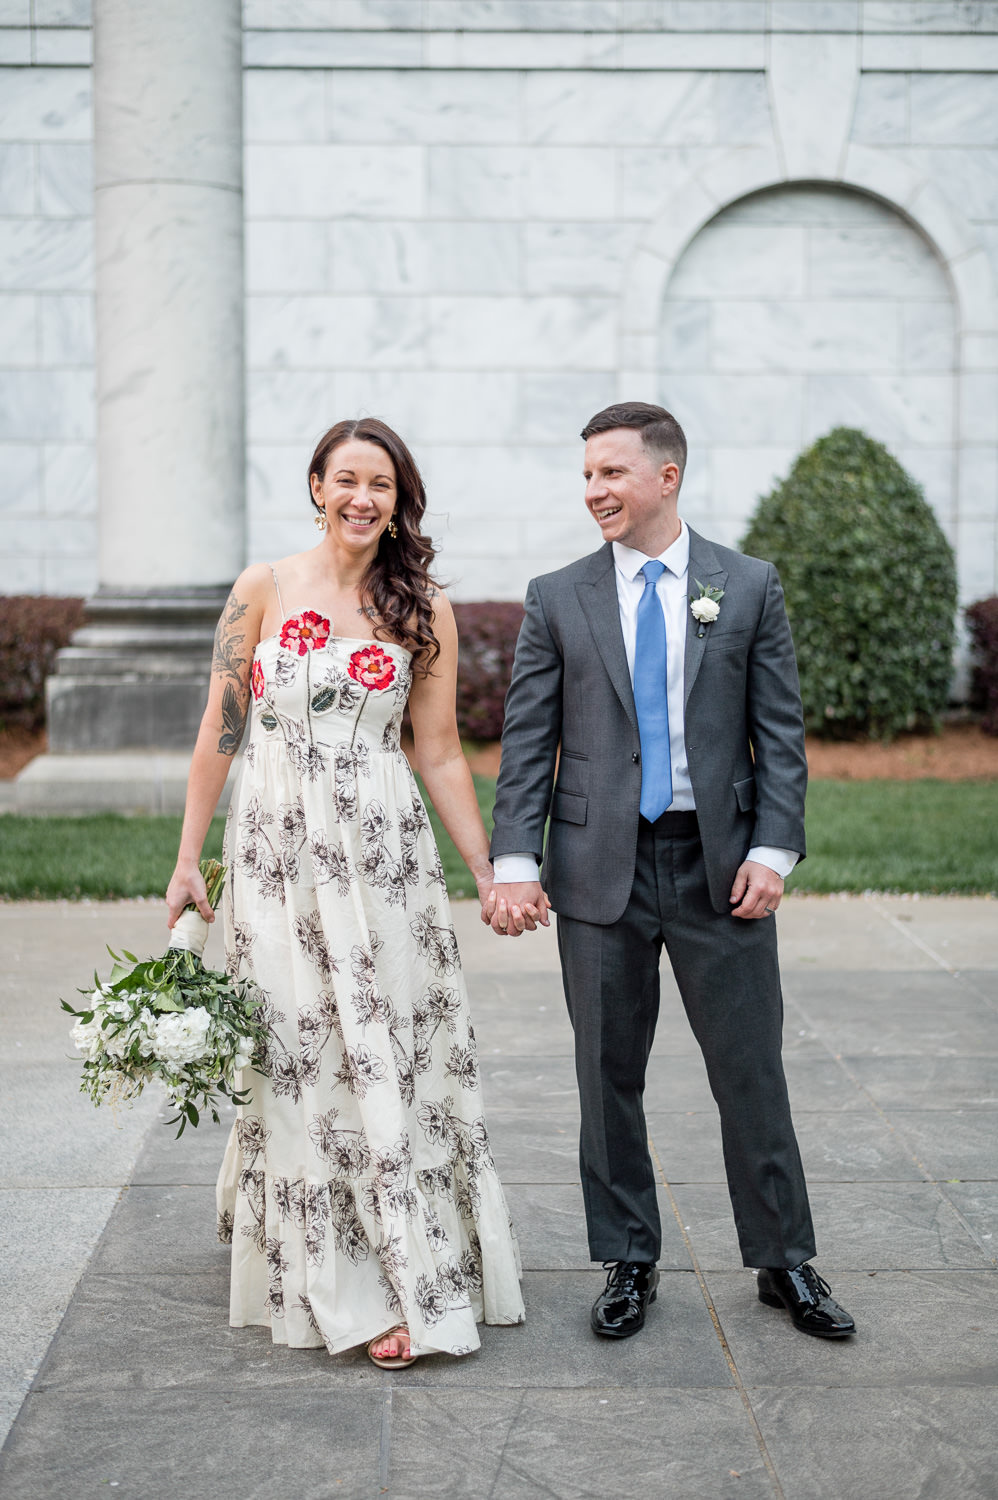 couples portraits at surprise rooftop wedding in midtown atlanta